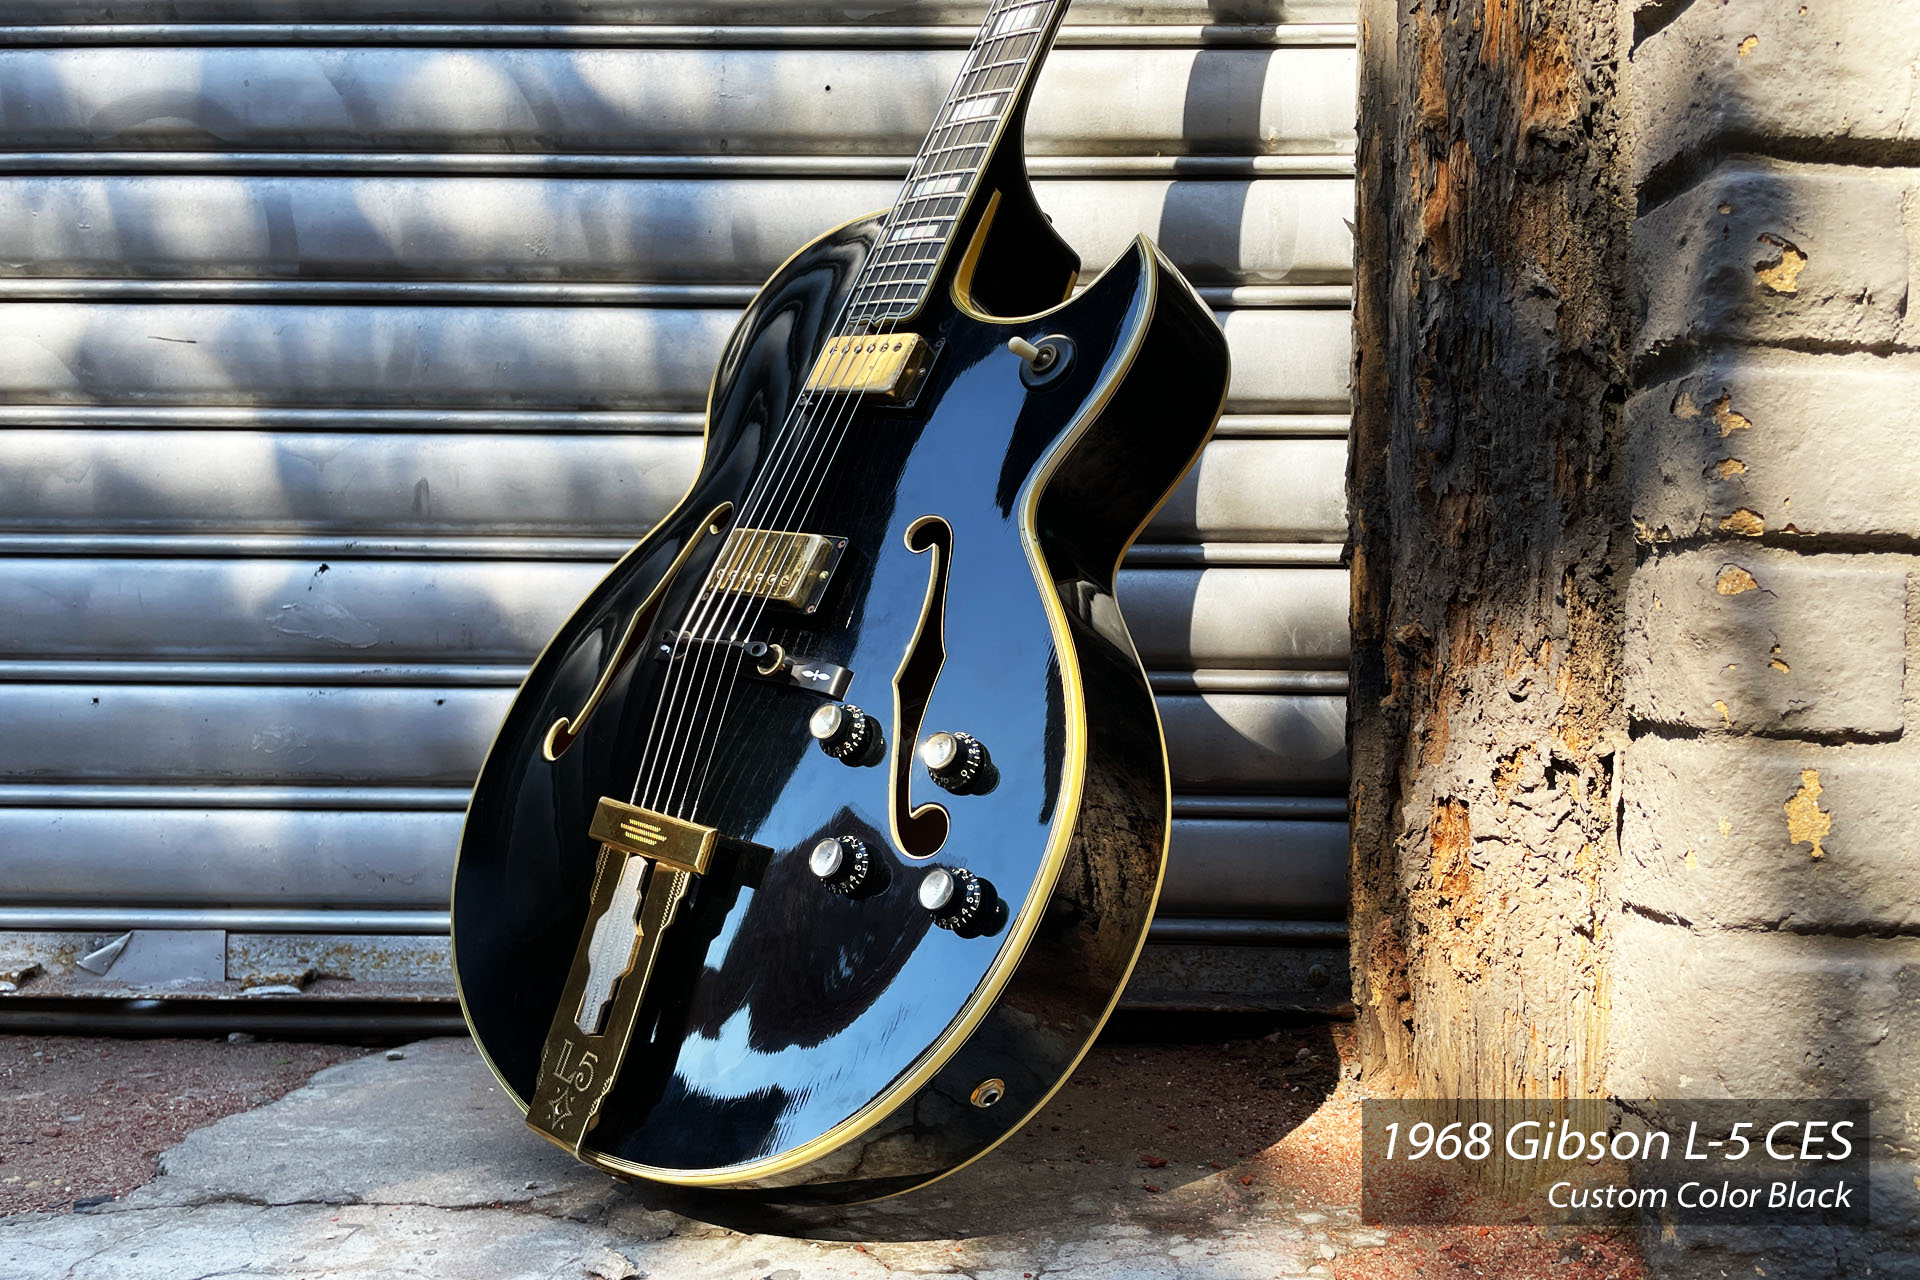 1968 Gibson L-5 CES